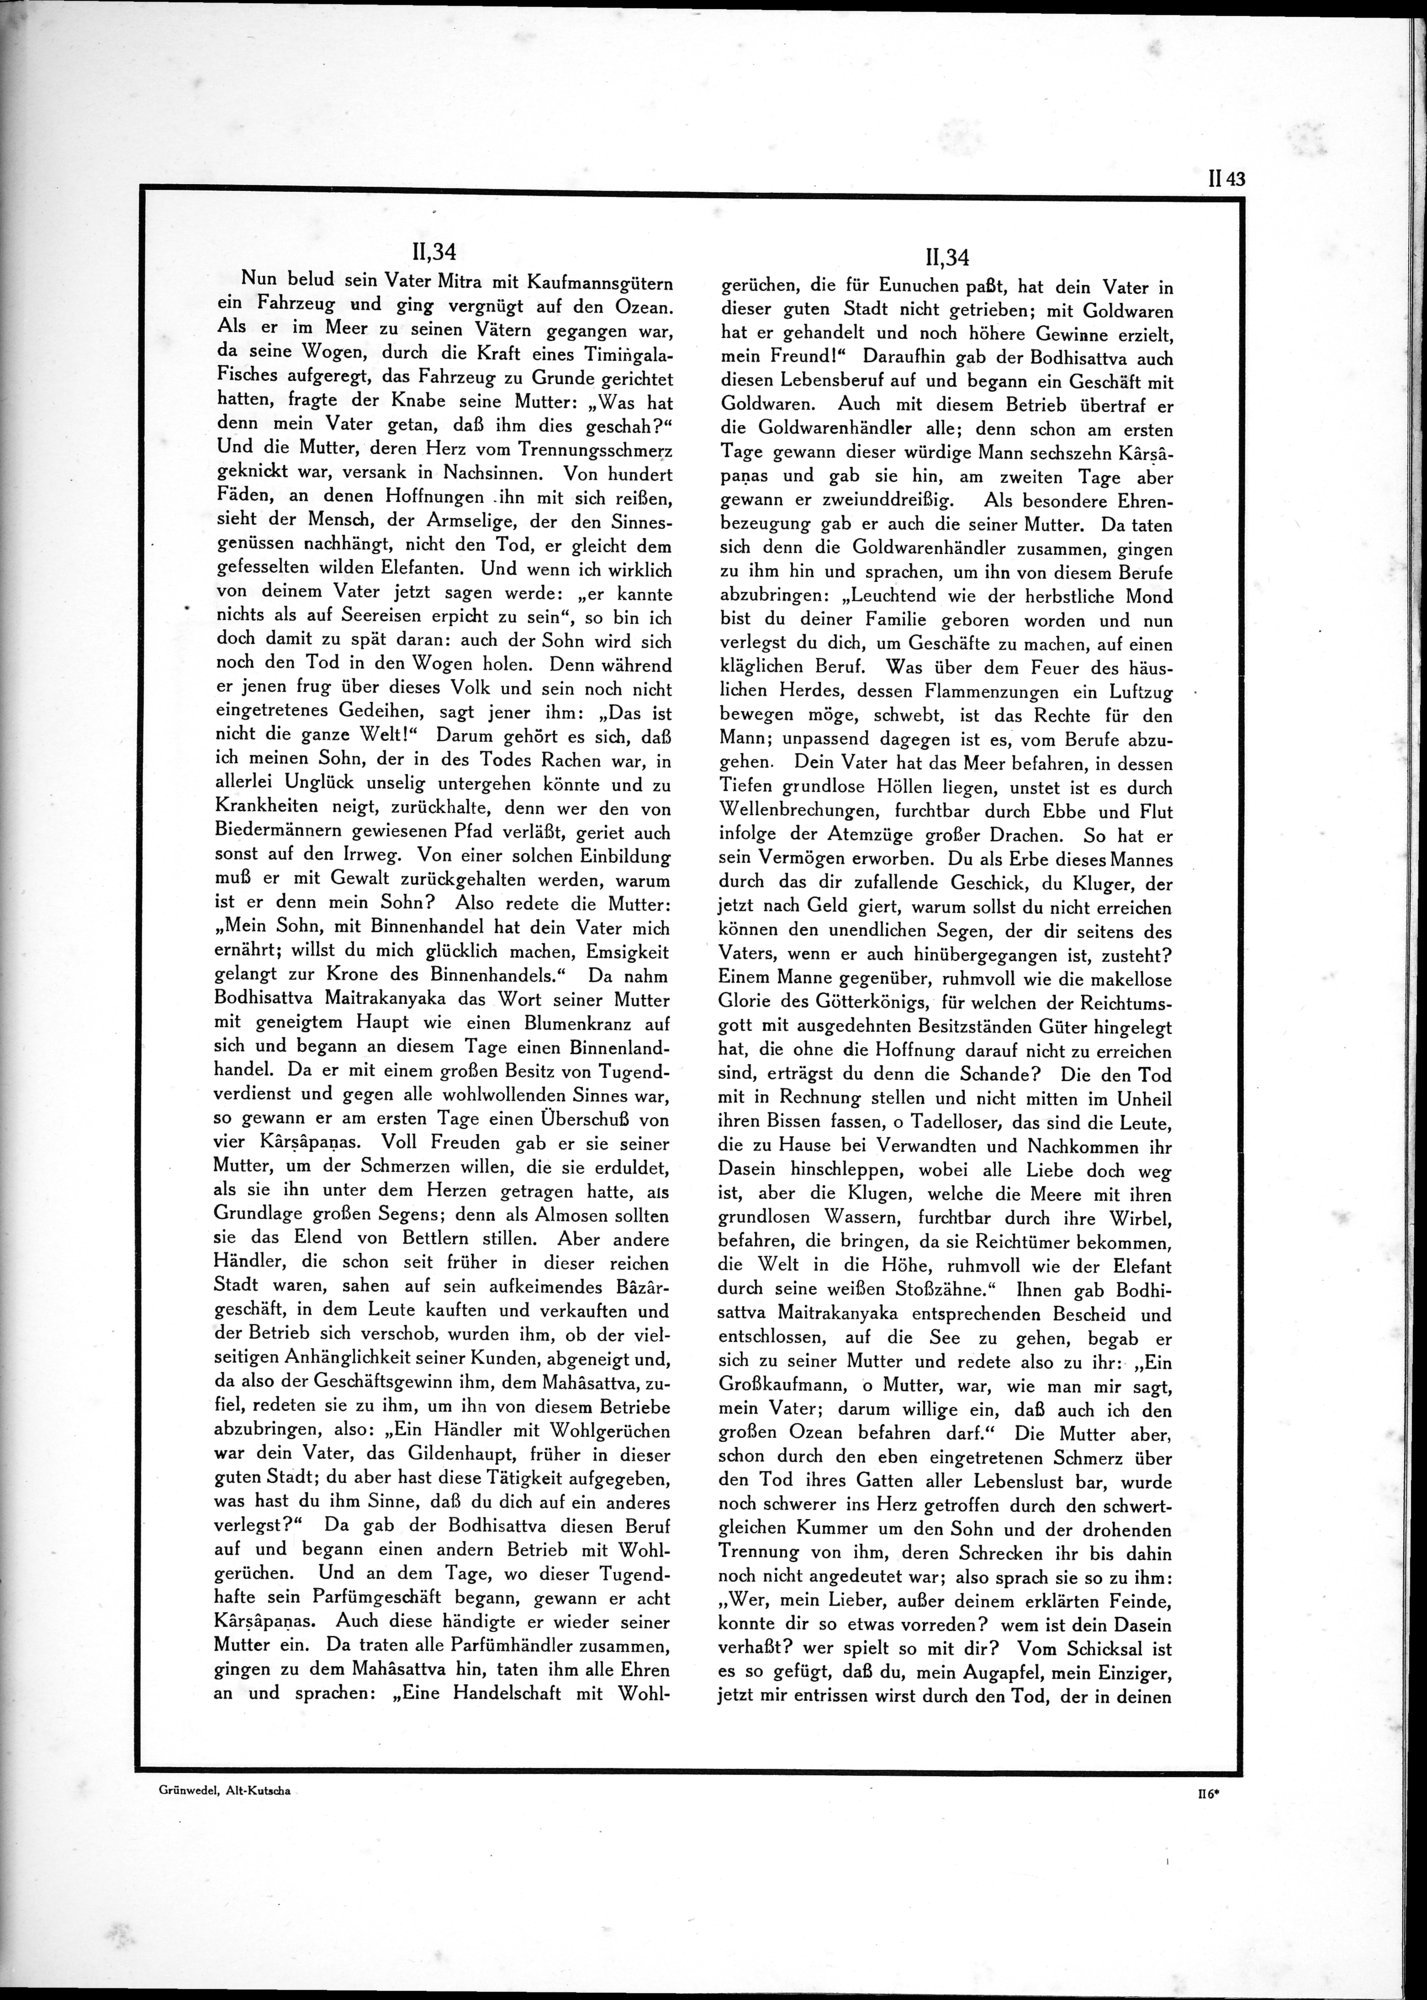 Alt-Kutscha : vol.1 / Page 149 (Grayscale High Resolution Image)